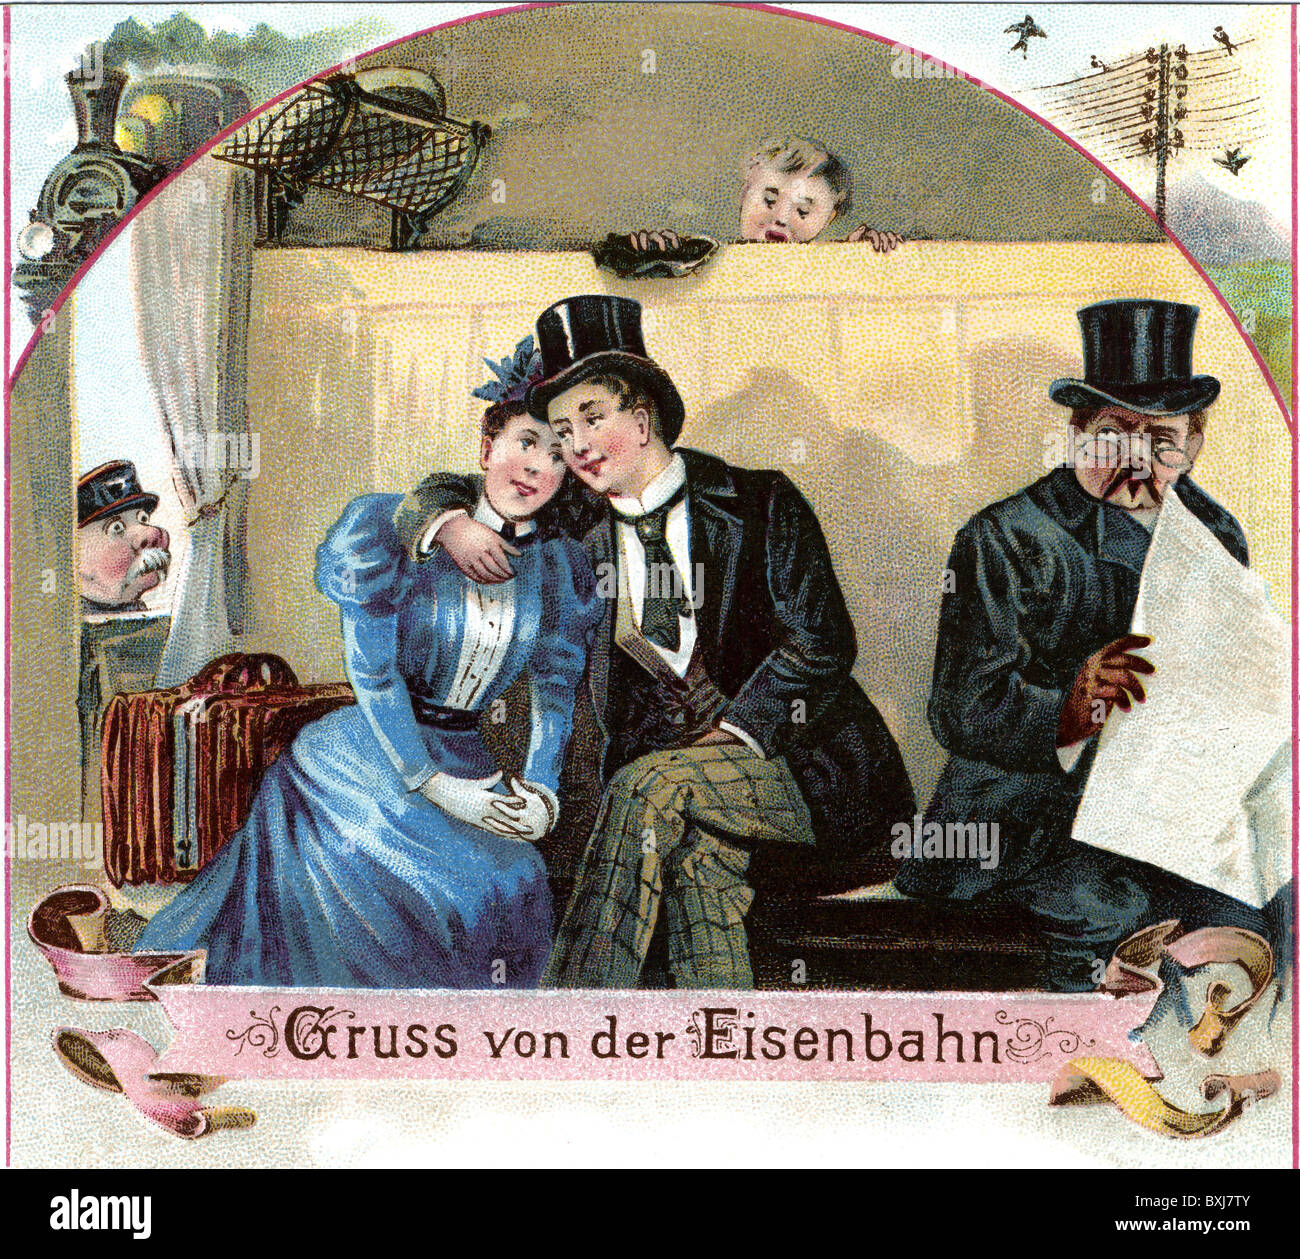 Transport / Transport, Bahn, Zugreisende, Liebhaber im Bahnabteil, Deutschland, 1898, Additional-Rights-Clearences-not available Stockfoto